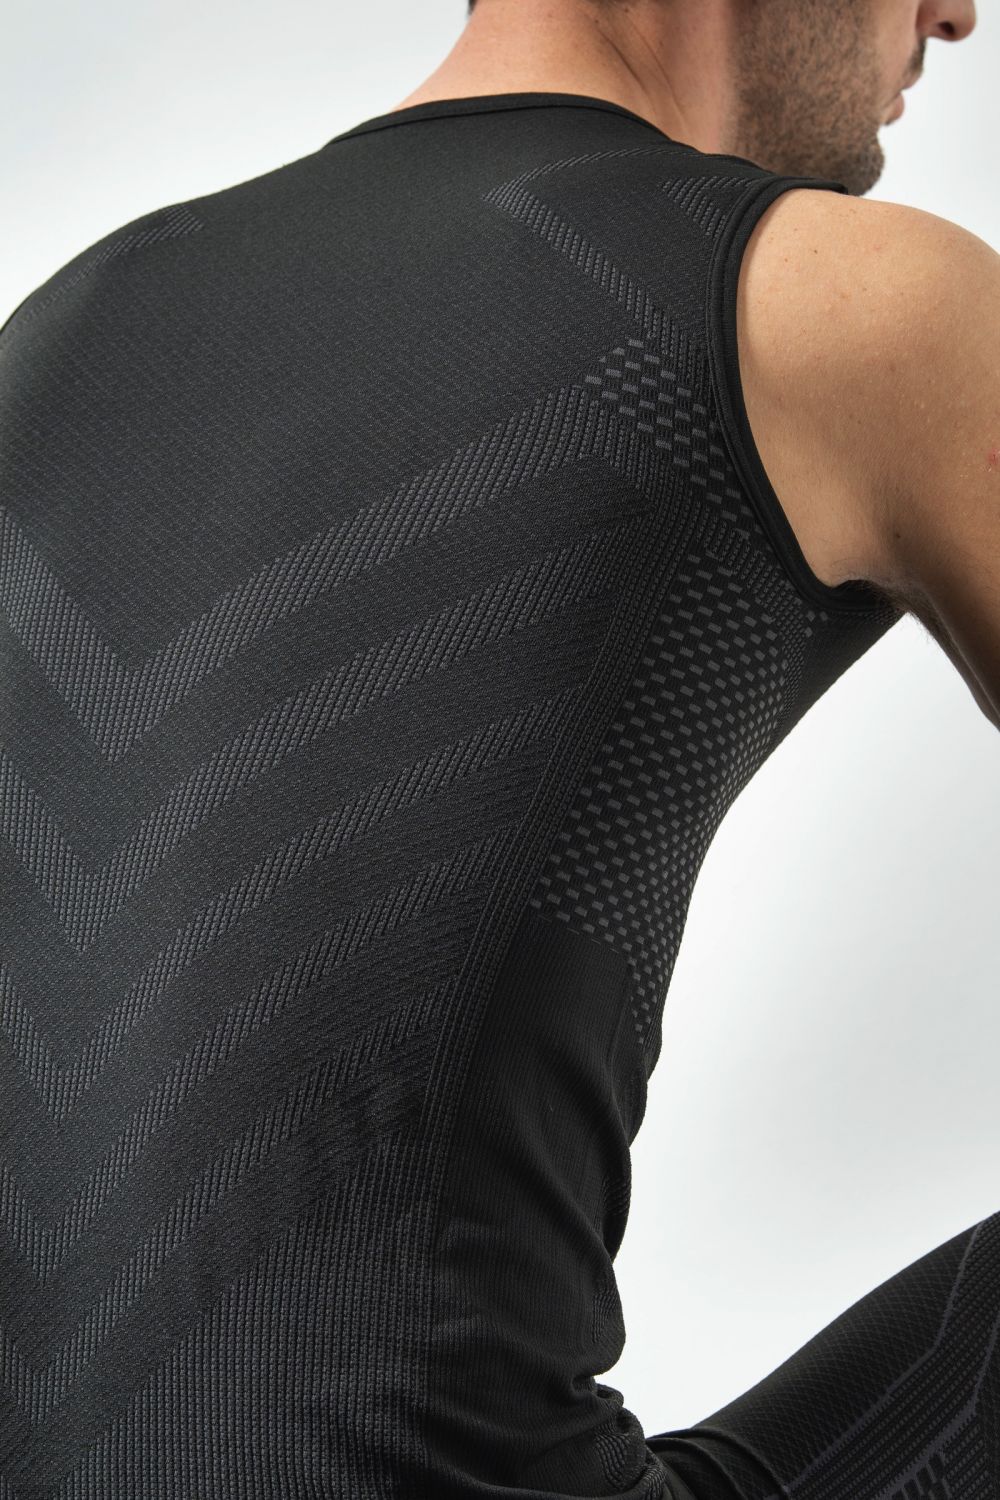 Men's Sleeveless Sports vest: Breathable, Energy Thermoregulating.